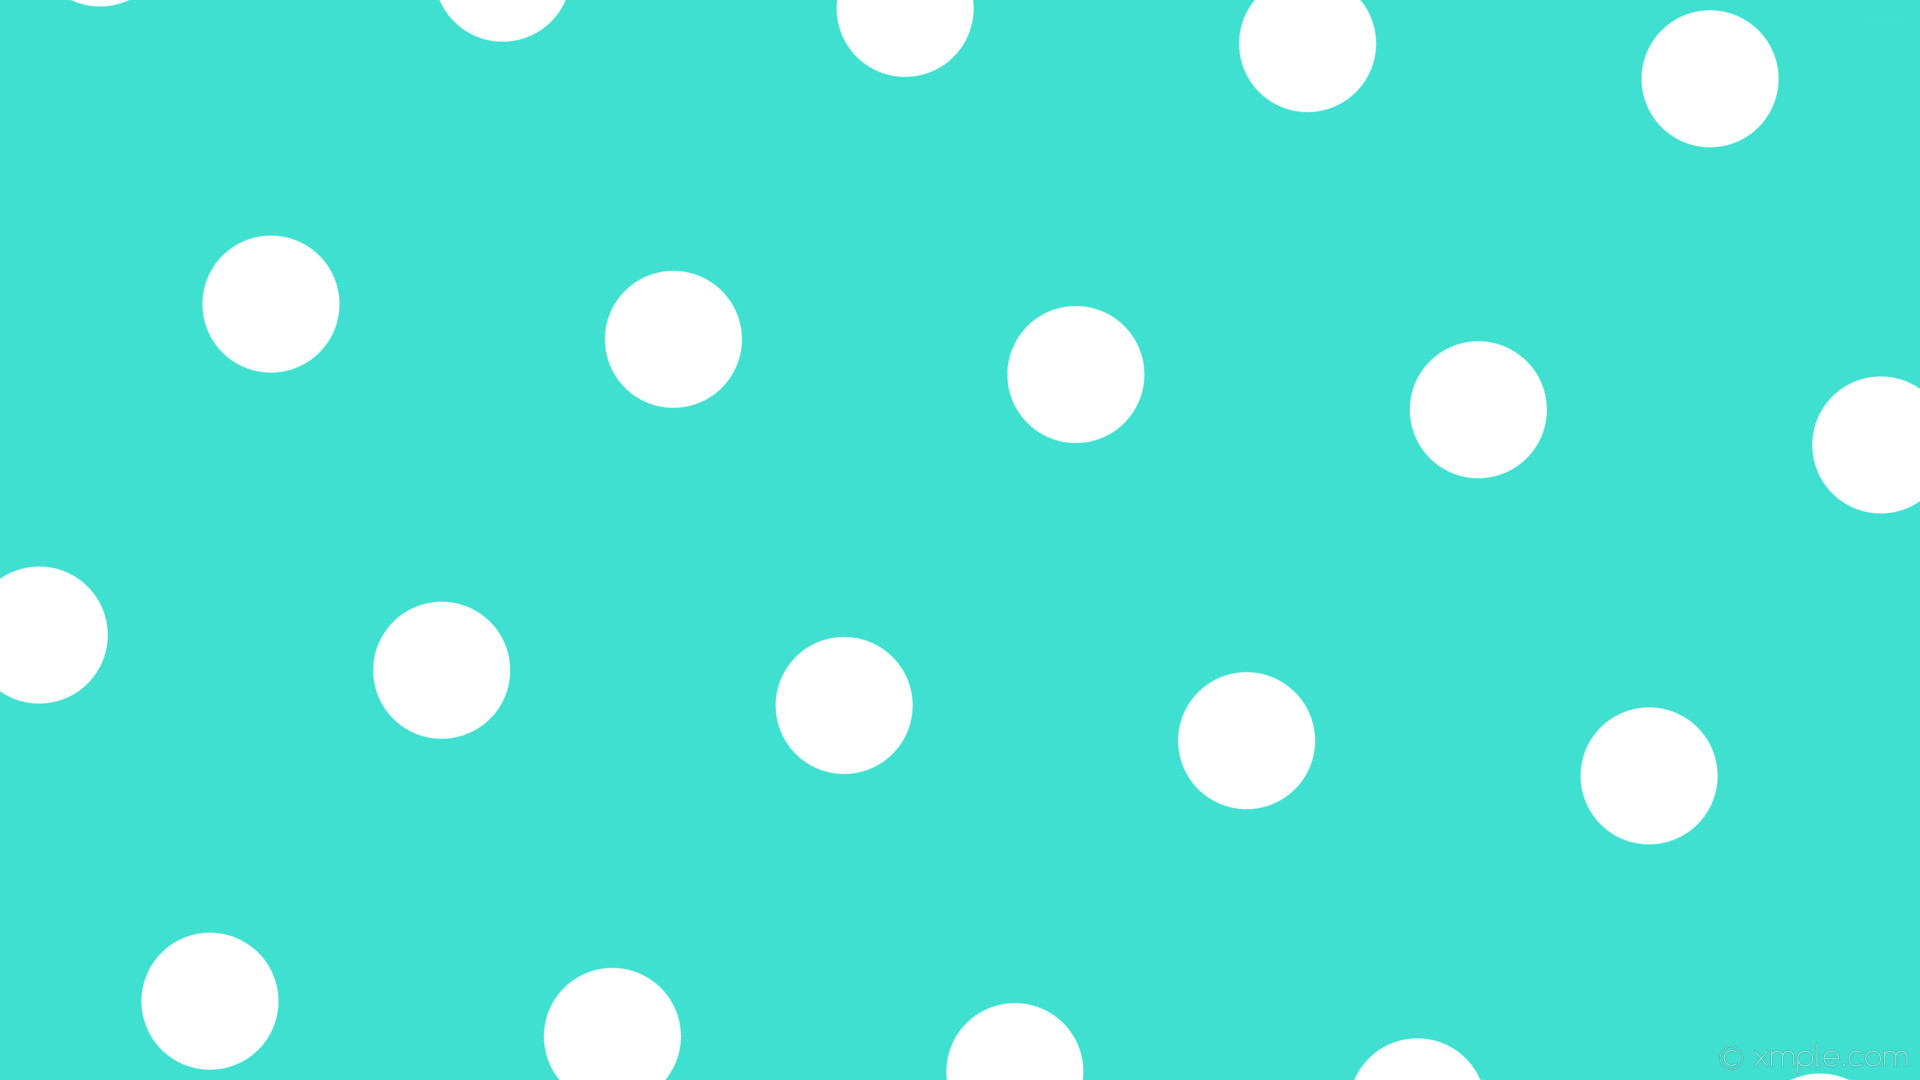 1920x1080 wallpaper polka dots white blue hexagon turquoise #40e0d0 #ffffff diagonal  55Â° 137px 404px